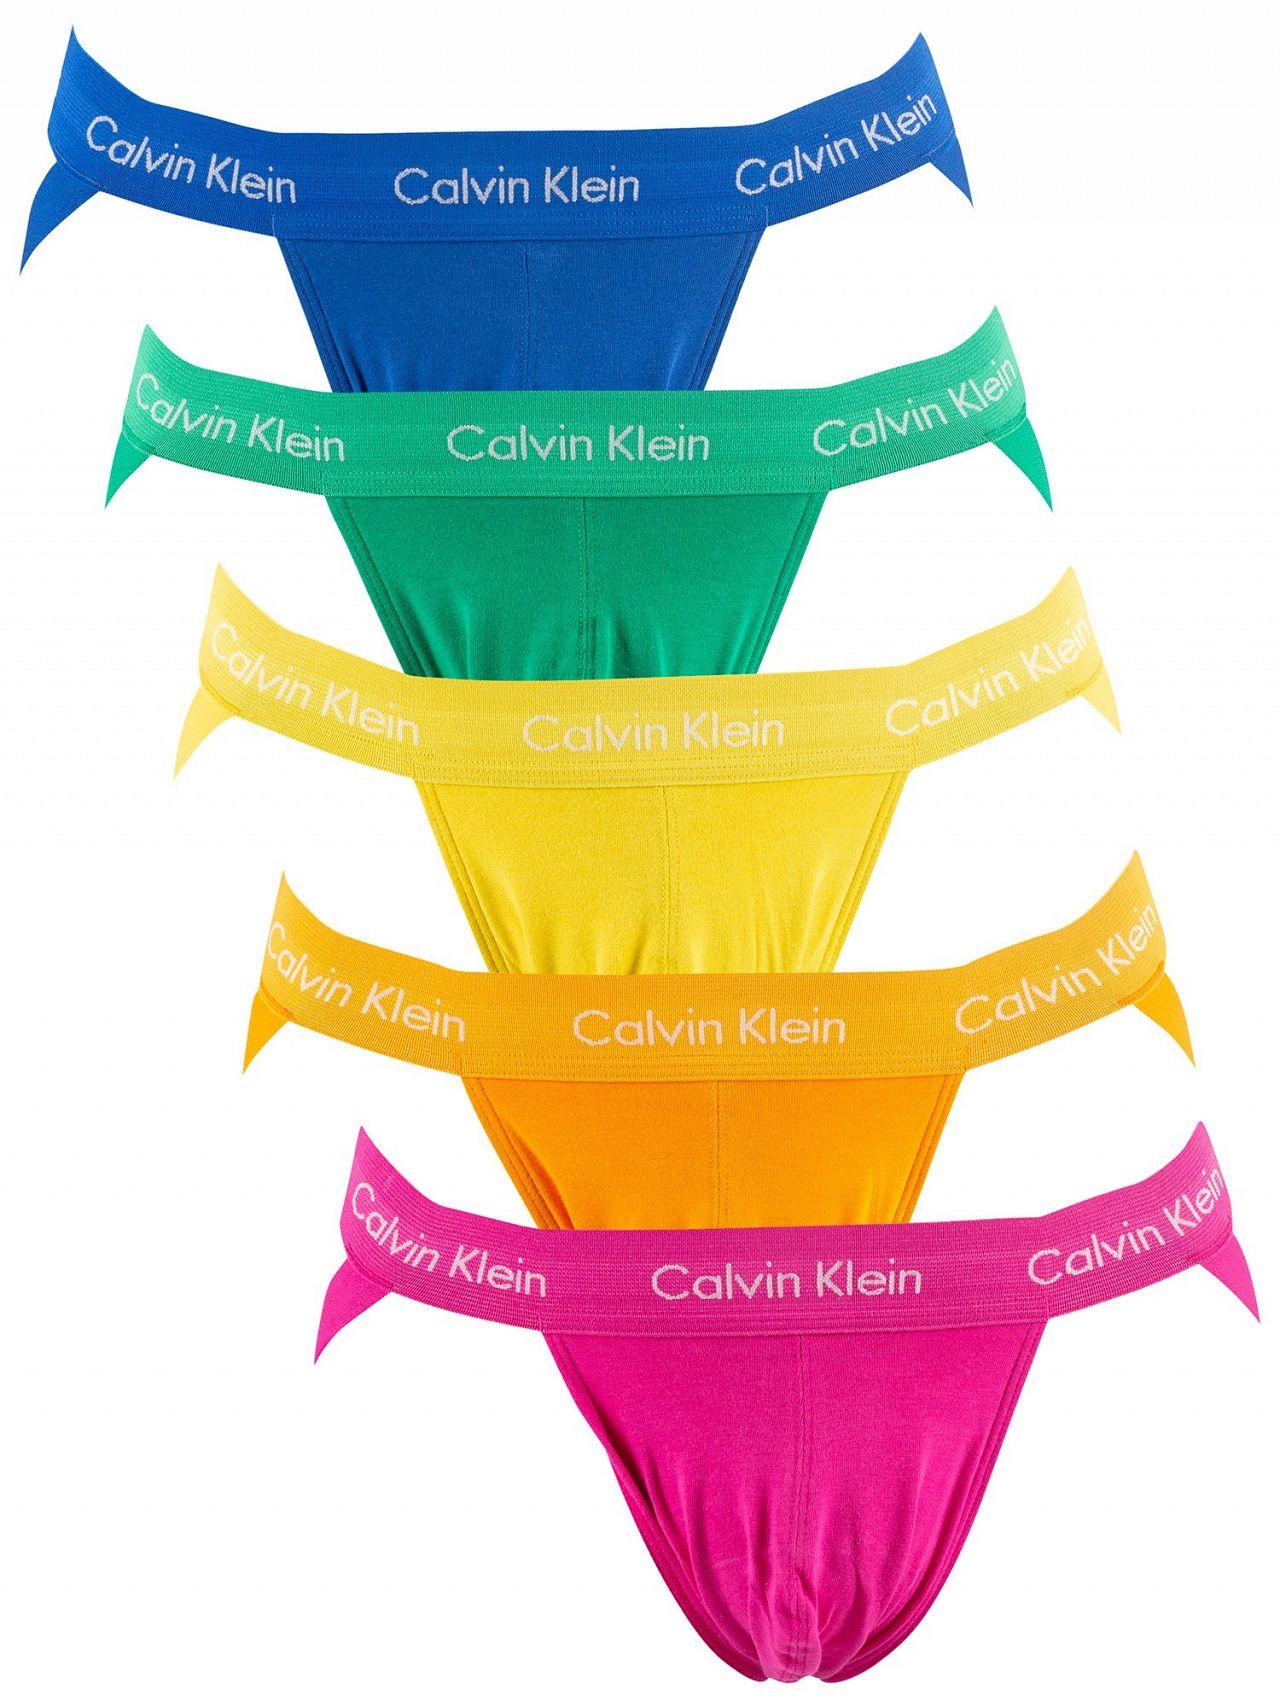 Calvin Klein Pride Colours 5 Pack Jockstraps for Men